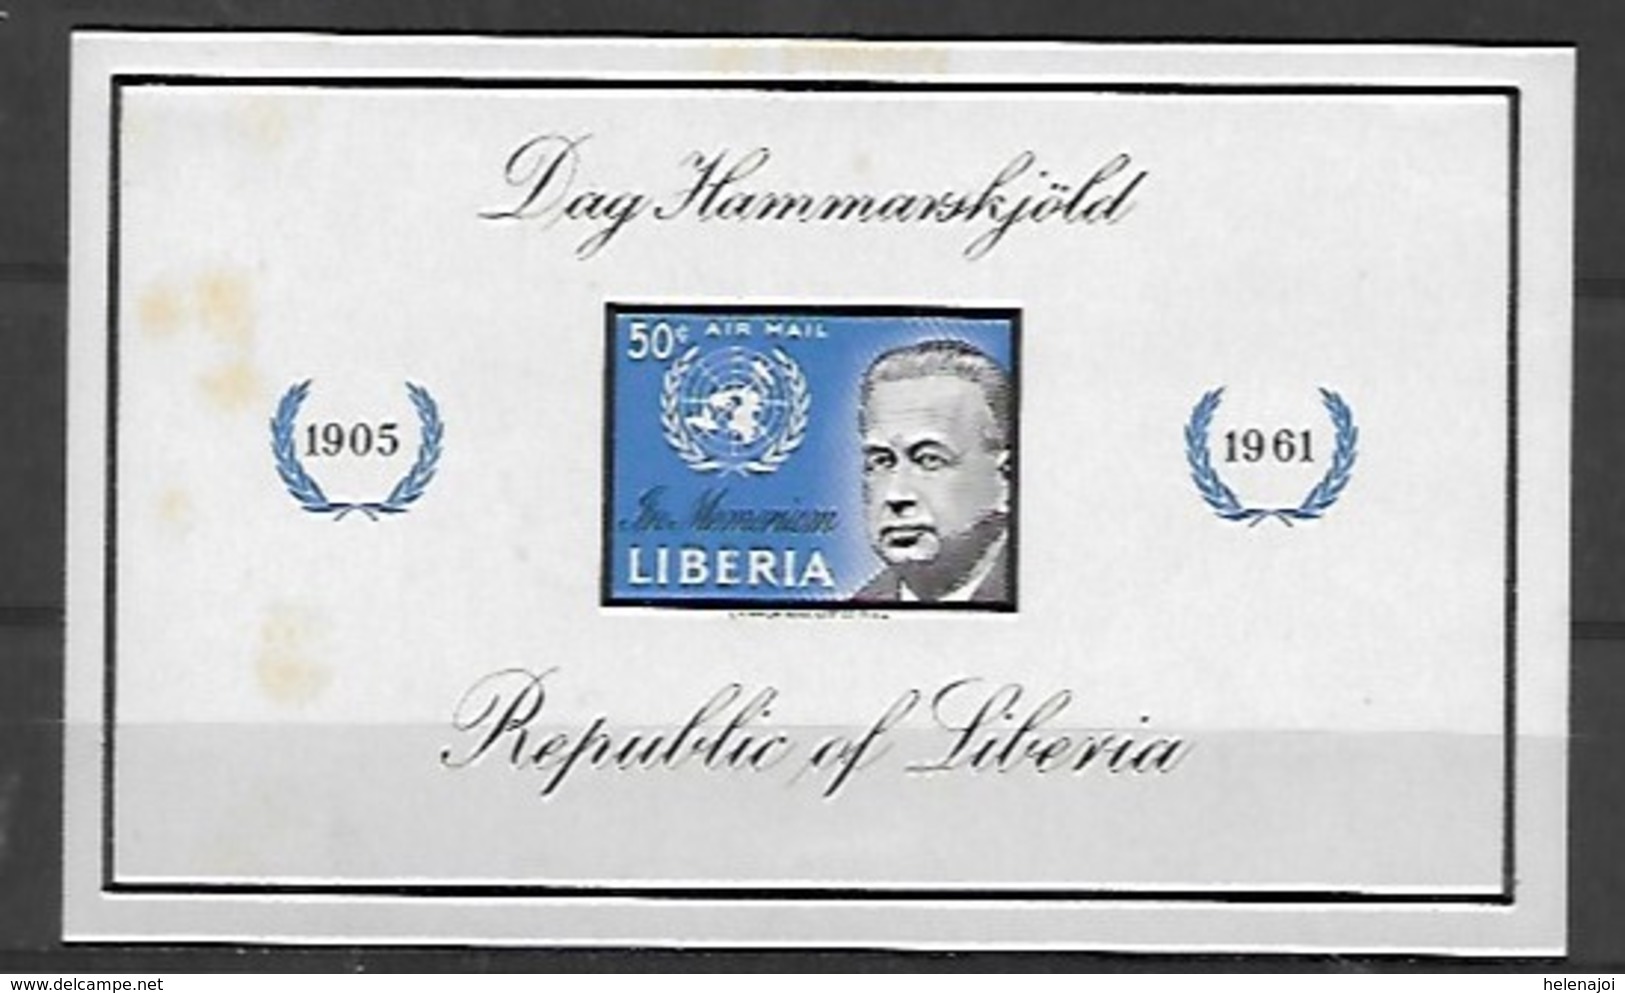 Libéria à La Mémoire De Dag Hammarskjold - Dag Hammarskjöld